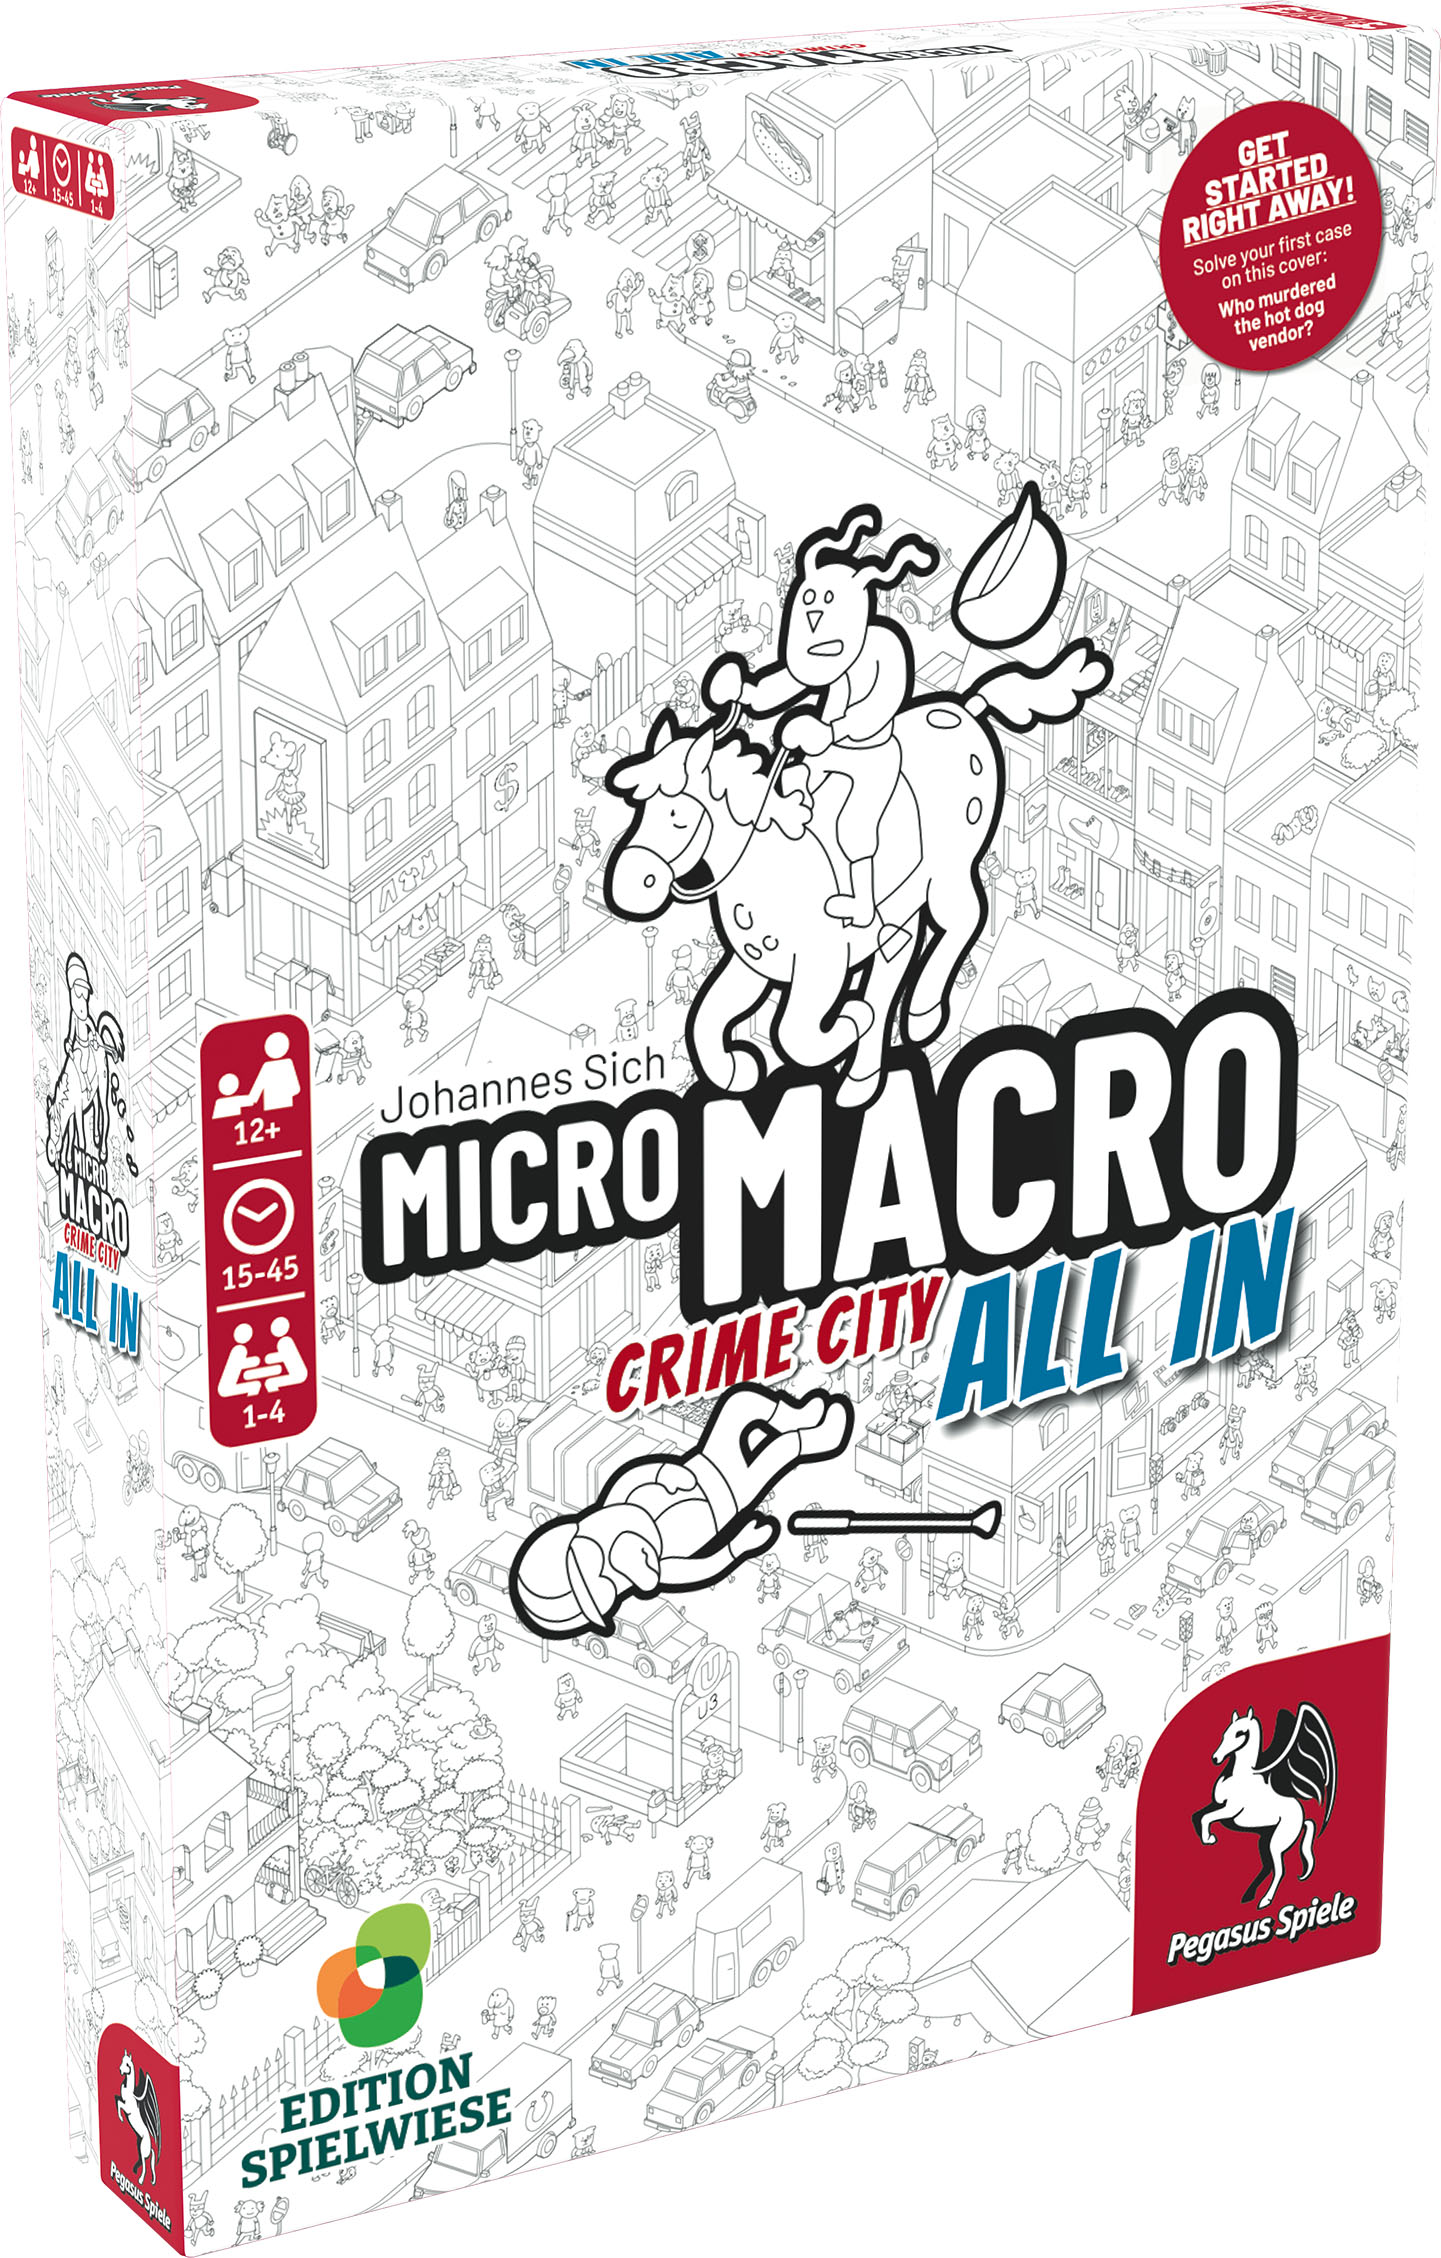 MicroMacro: Crime City 3 All In -  Pegasus Spiele